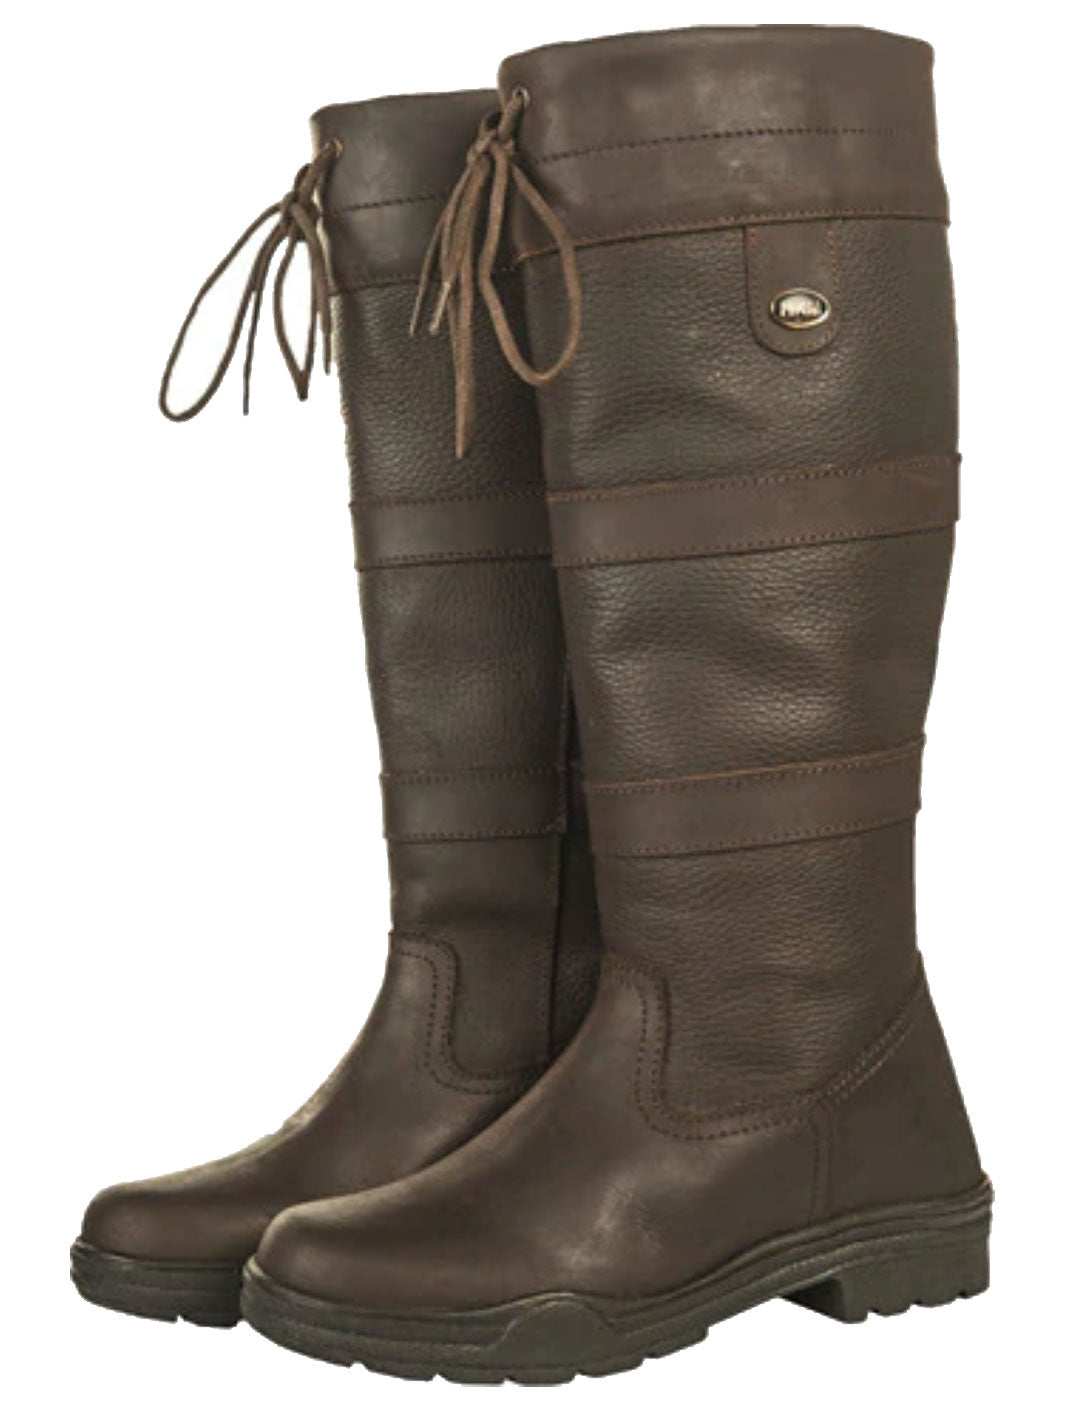 HKM Belmond Winter Boots